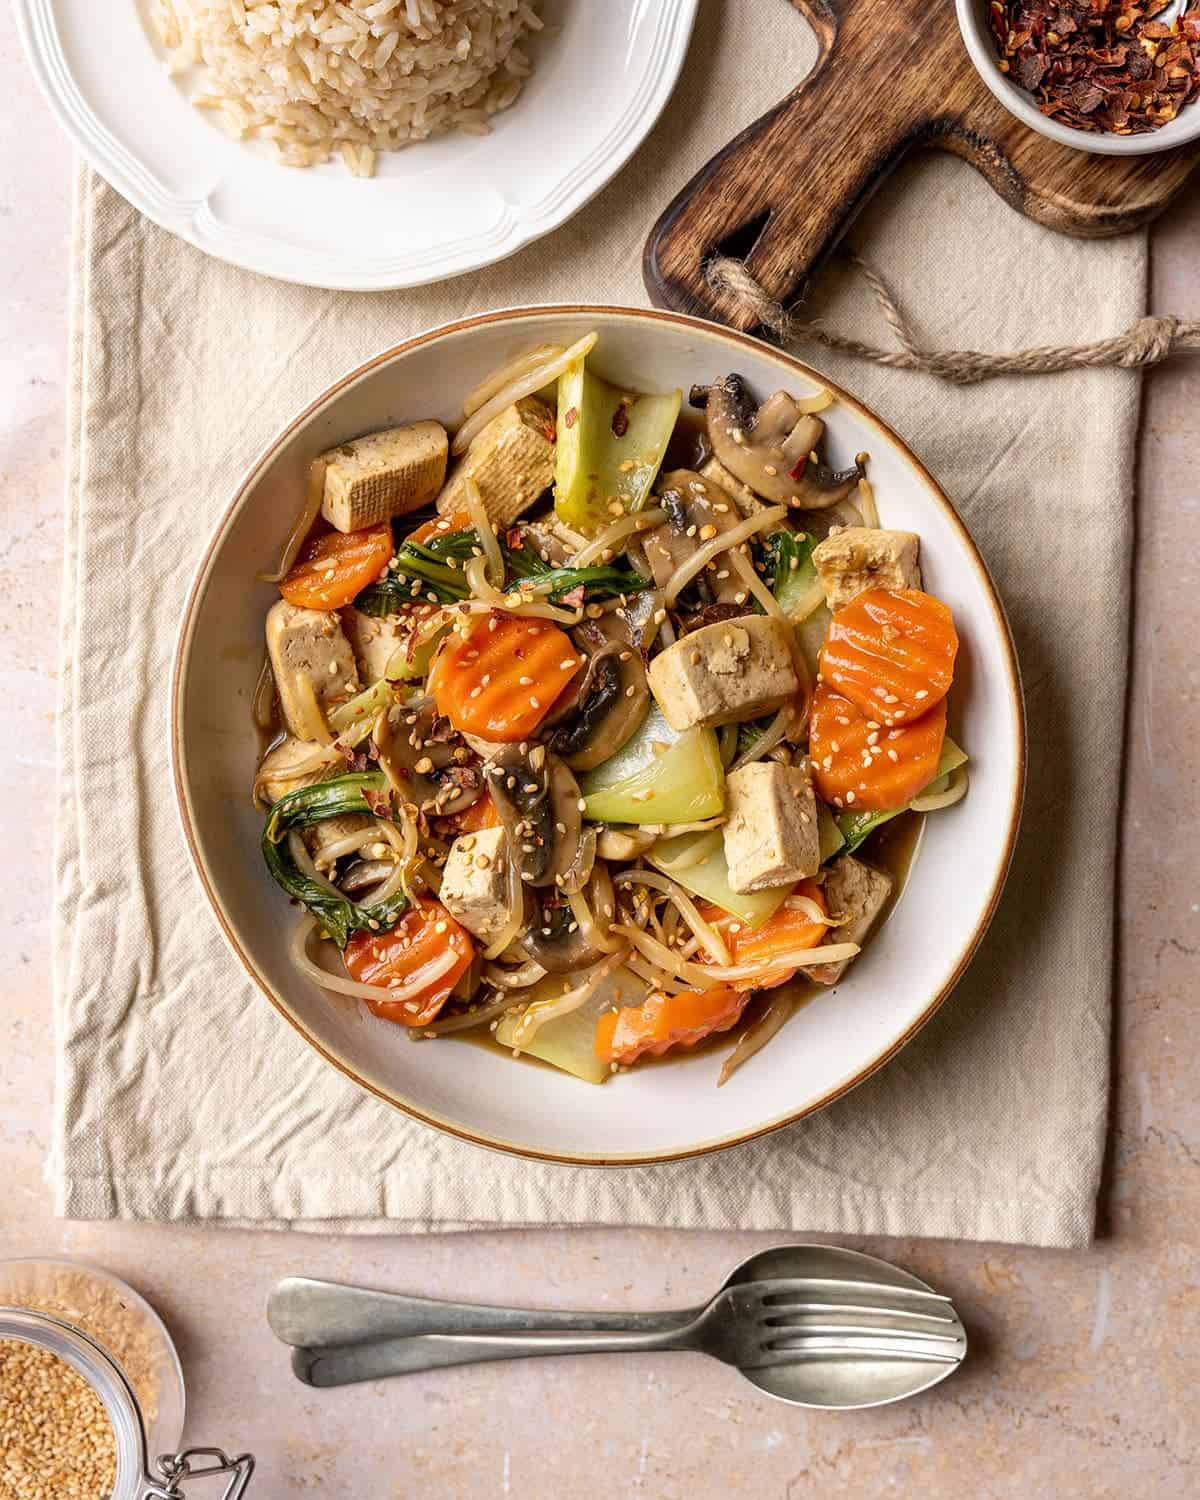 Vegan tofu stir fry with vegetables and rice.